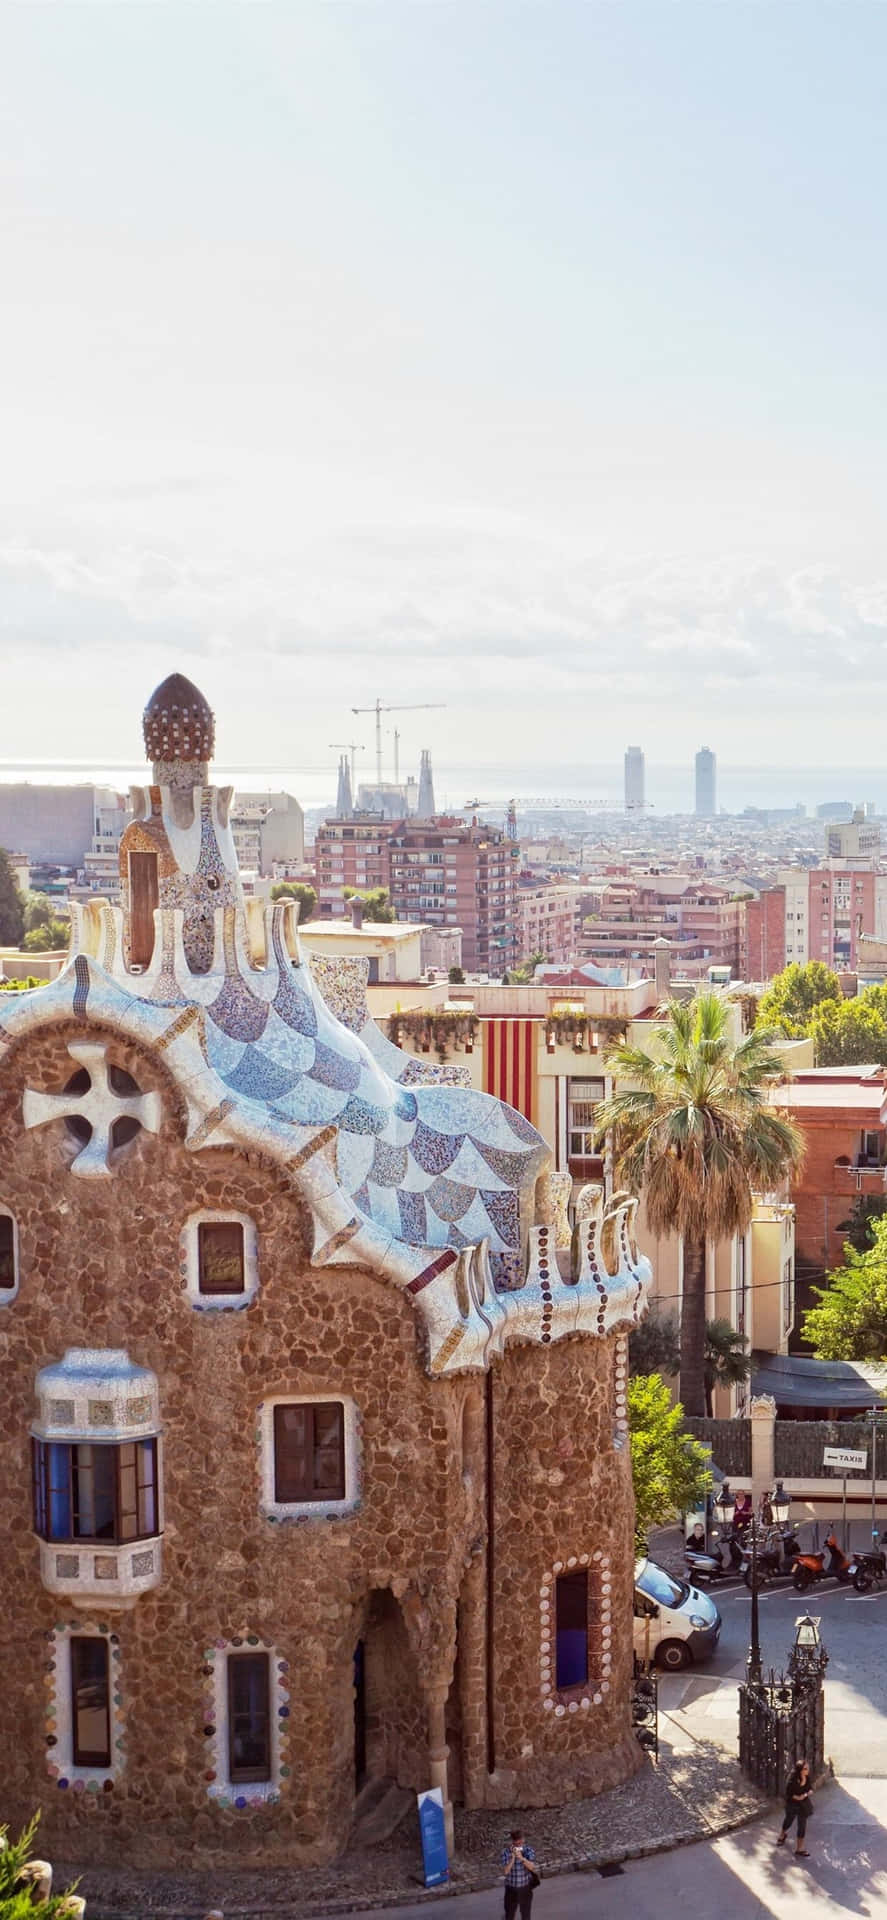 The Gaud House In Barcelona, Spain